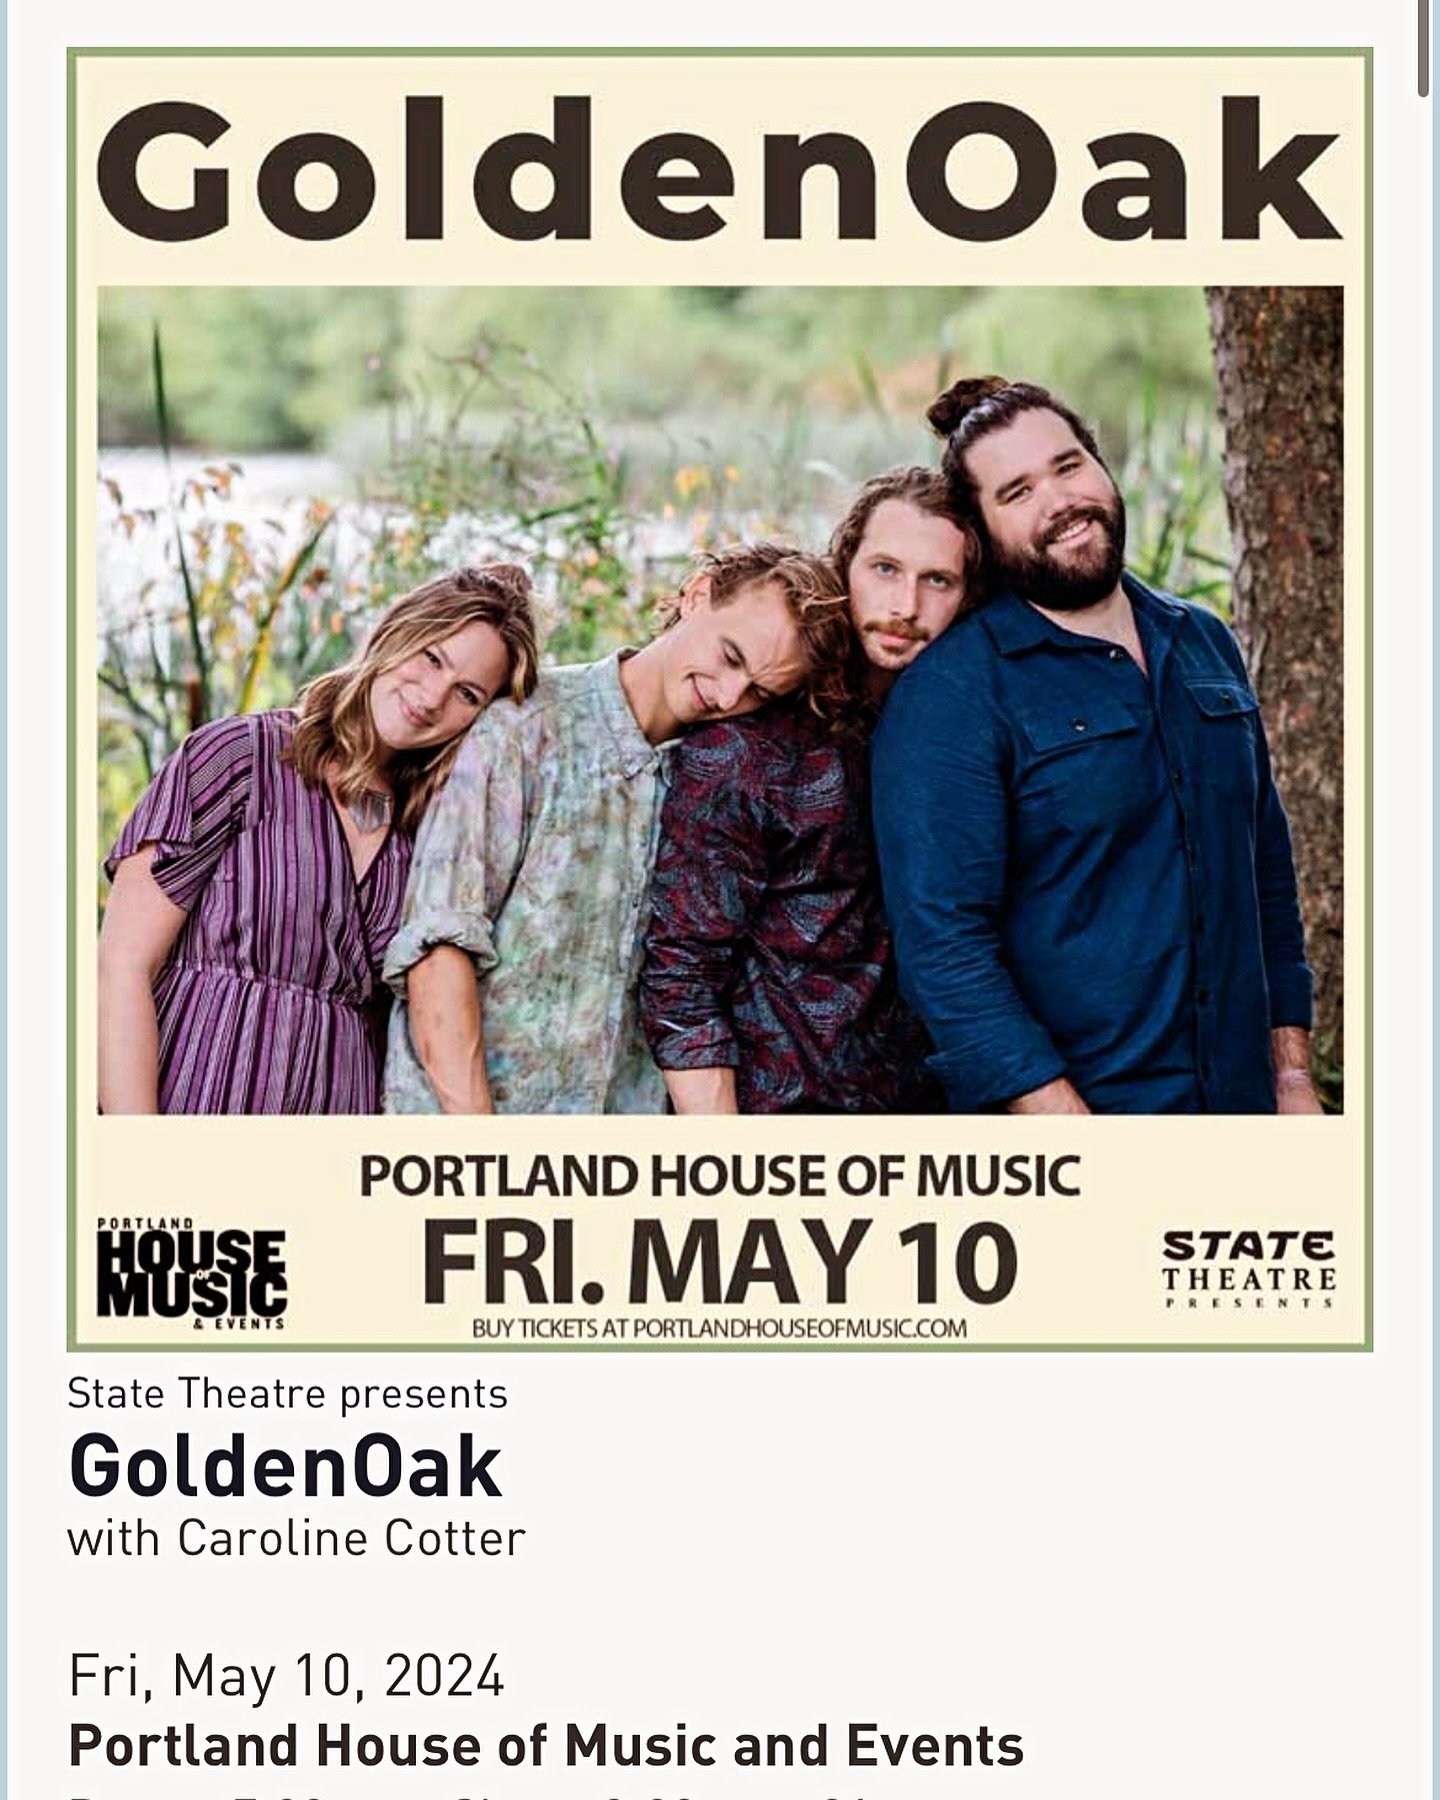 Friday night in Portland, with Golden Oak! 

@portlandhouseofmusic @goldenoakmusic @statetheatreportland #portlandmaine #portlandmainemusic